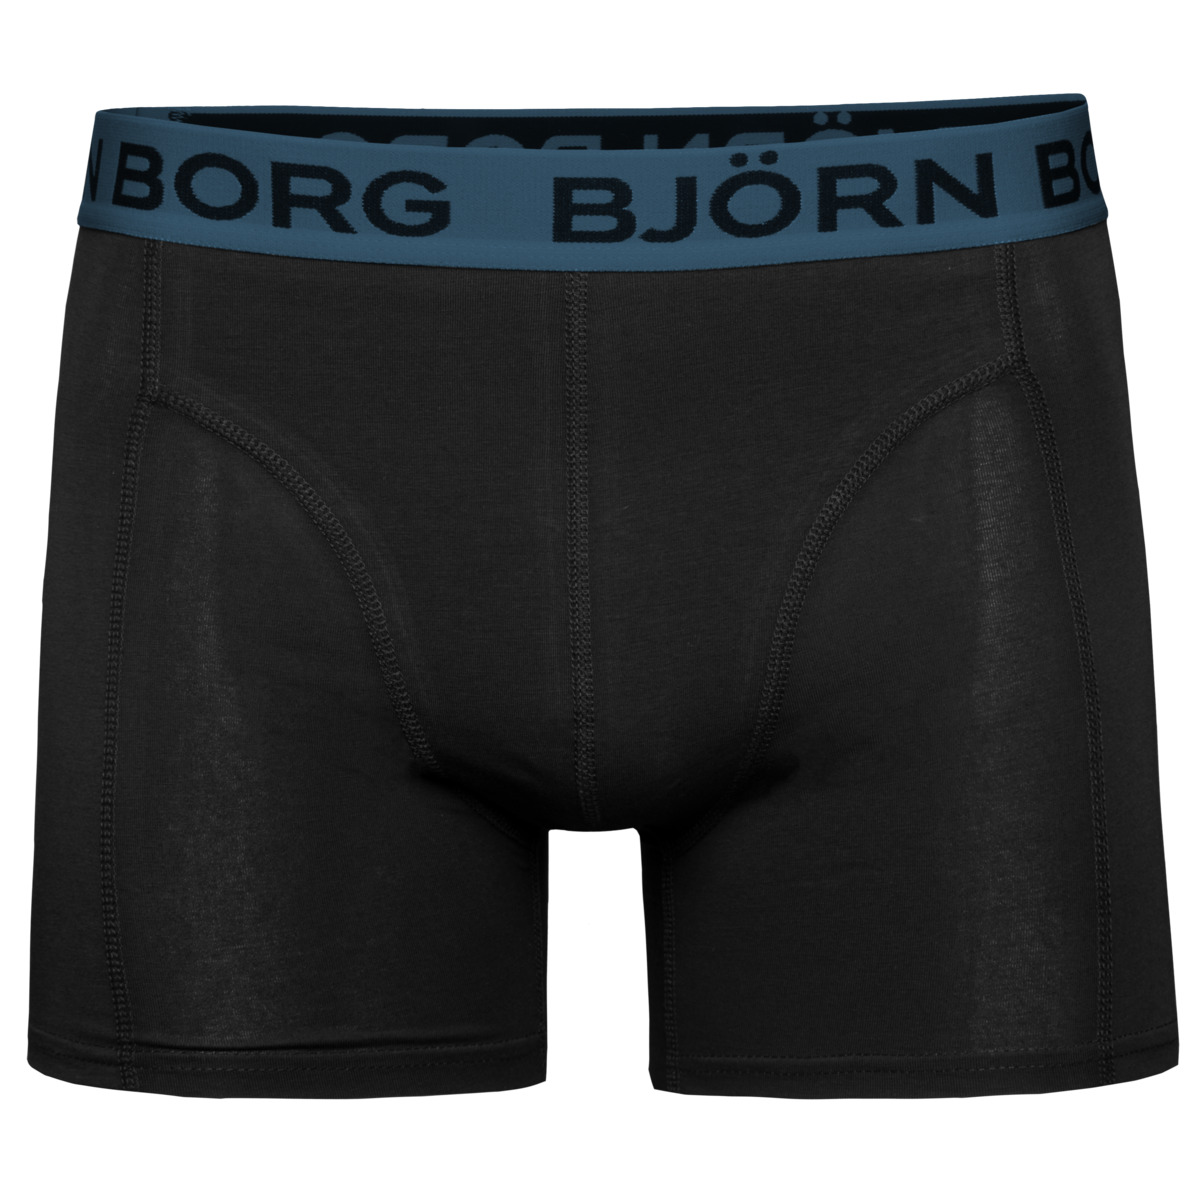 Björn Borg Cotton Stretch Boxer 7er Pack Boxershorts schwarz